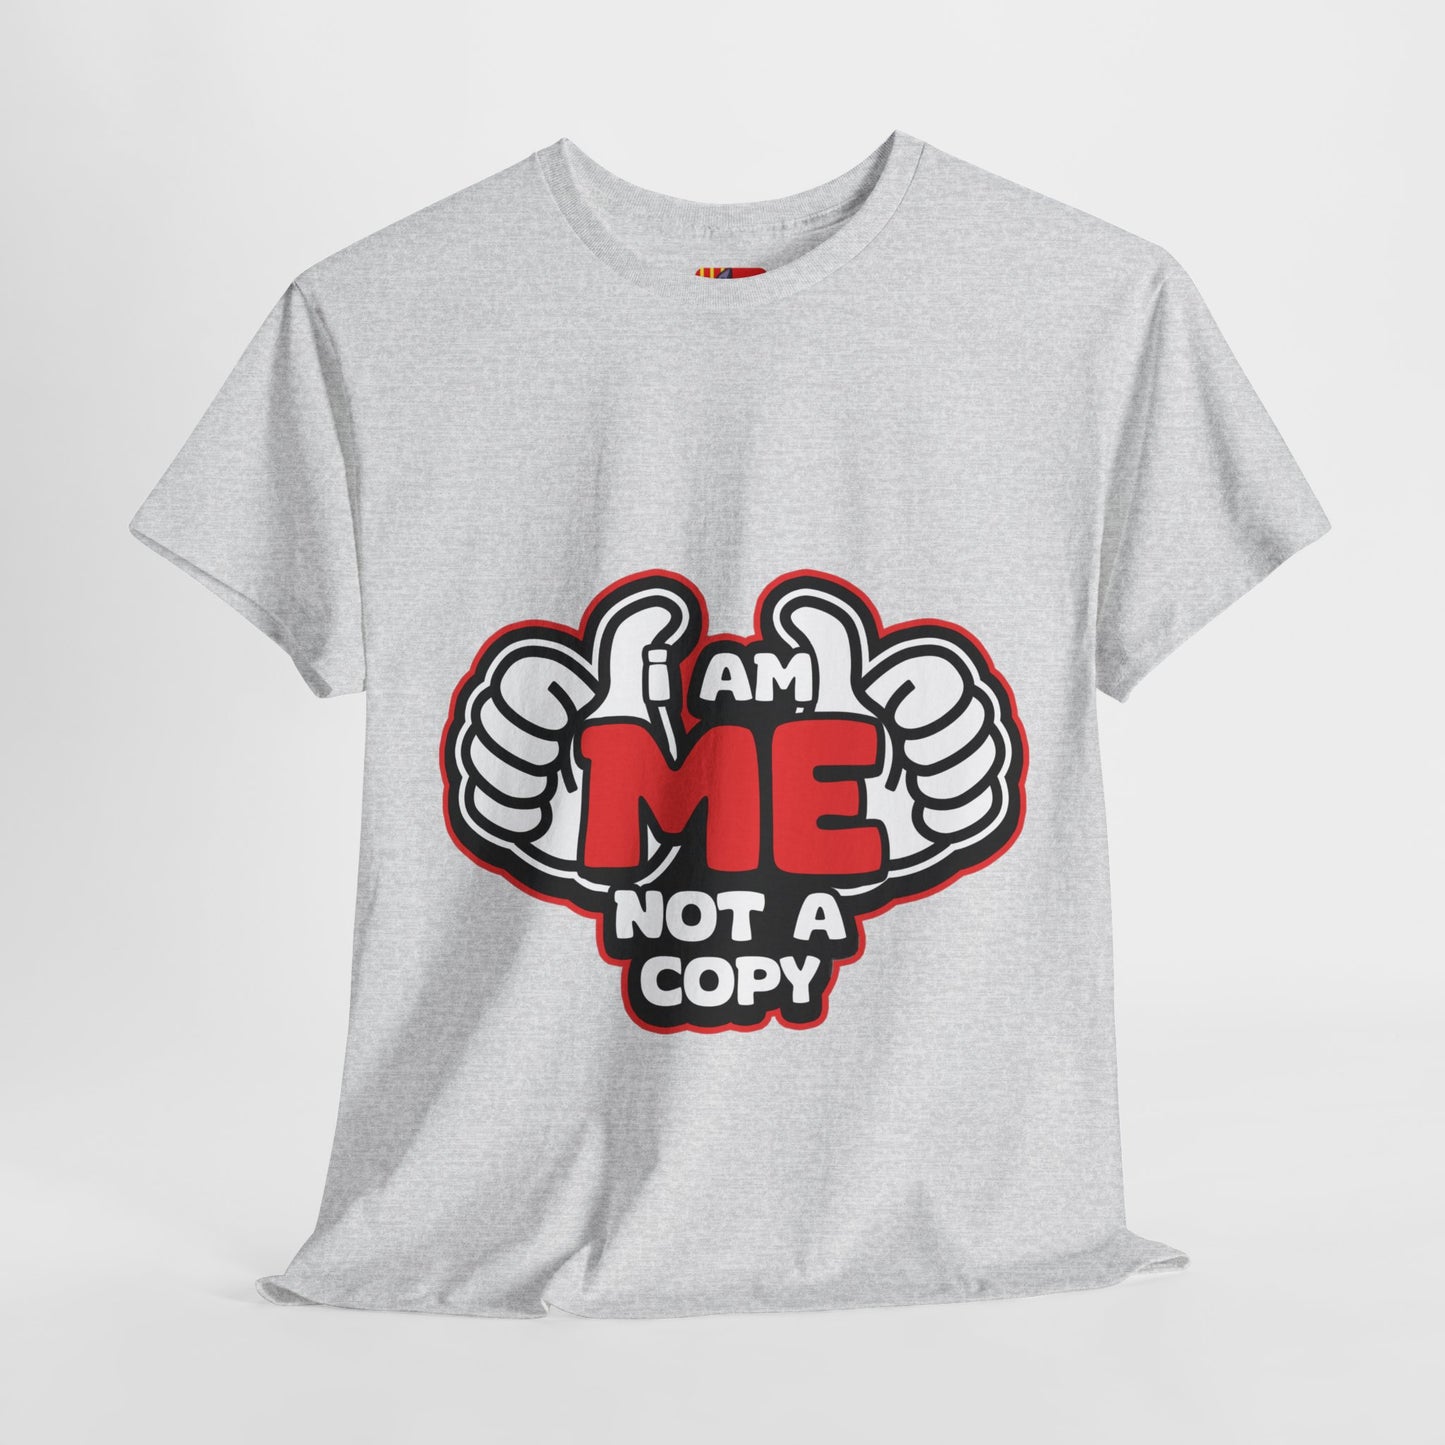 The Resilient Soul T-Shirt: I am me not a copy